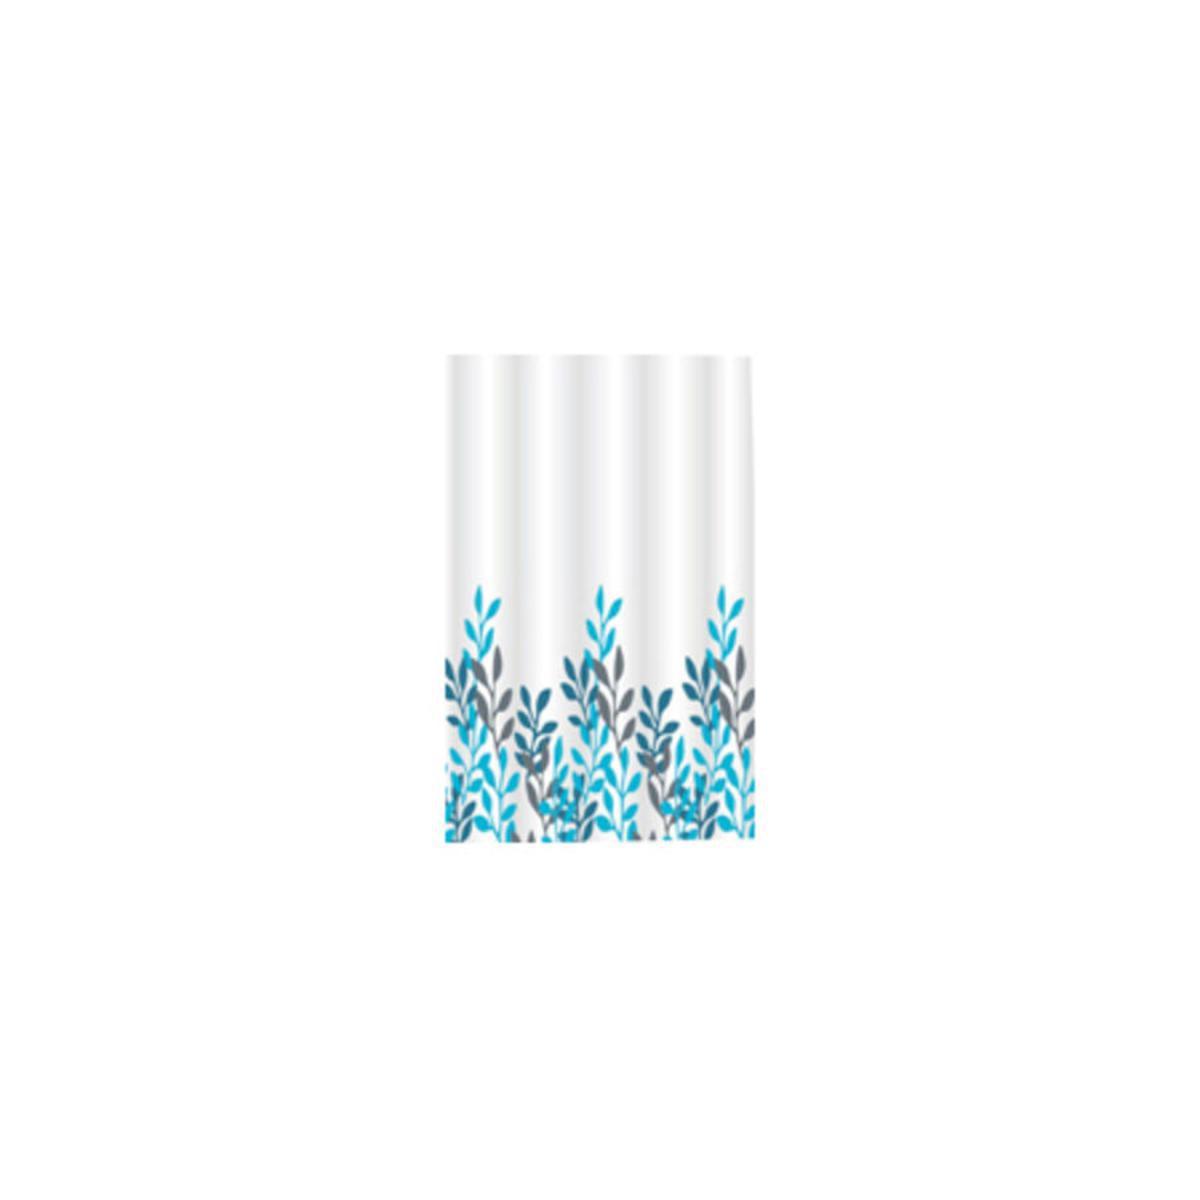 Rideau de douche feuilles en polyester - 180 x 200 cm - Blanc, bleu